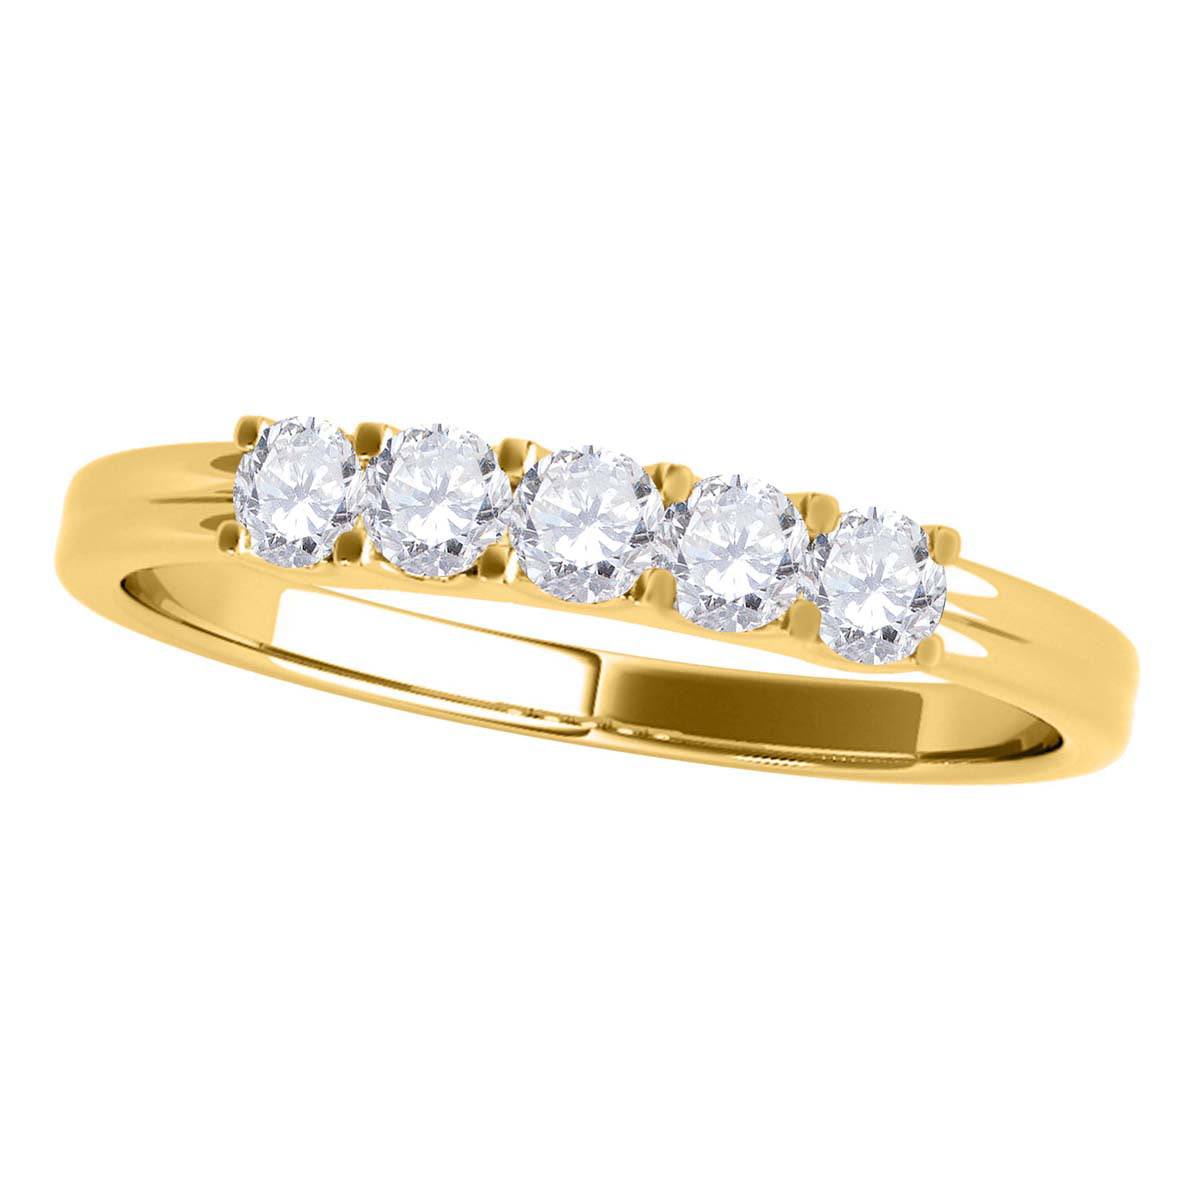 MauliJewels Rings for Women 1.82 Carat Cushion Cut Peridot and Diamond Ring prong 10K Yellow Gold Gemstone Wedding Jewelry Collection 